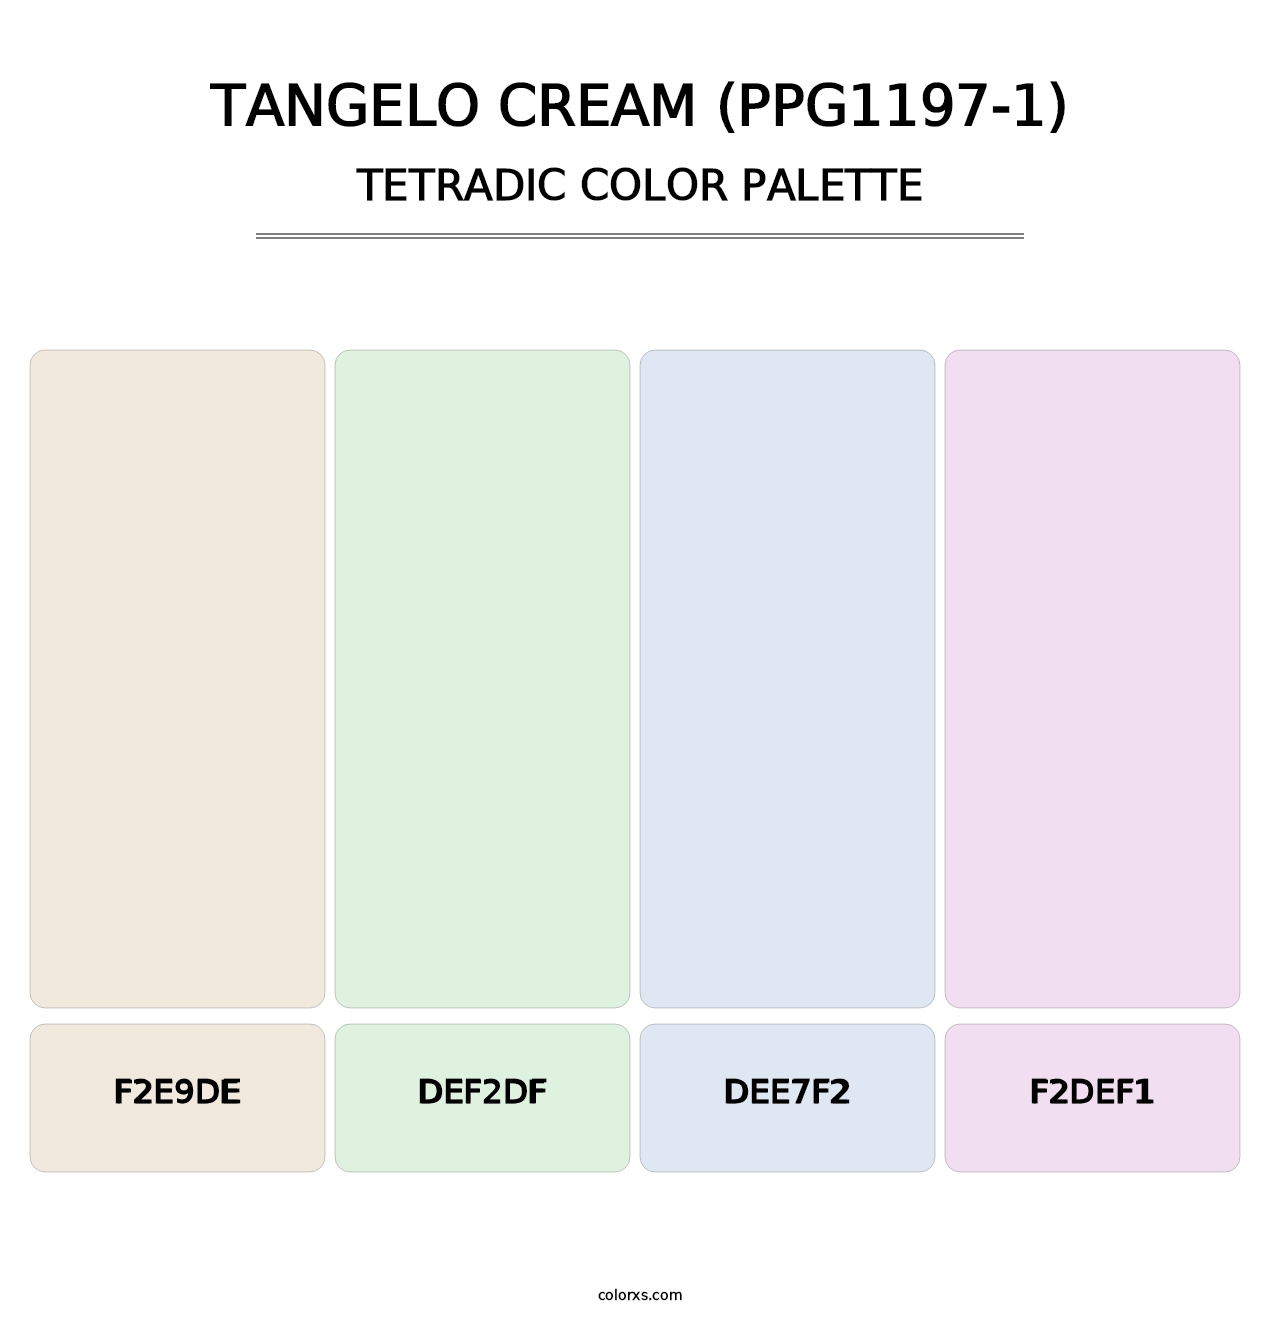 Tangelo Cream (PPG1197-1) - Tetradic Color Palette